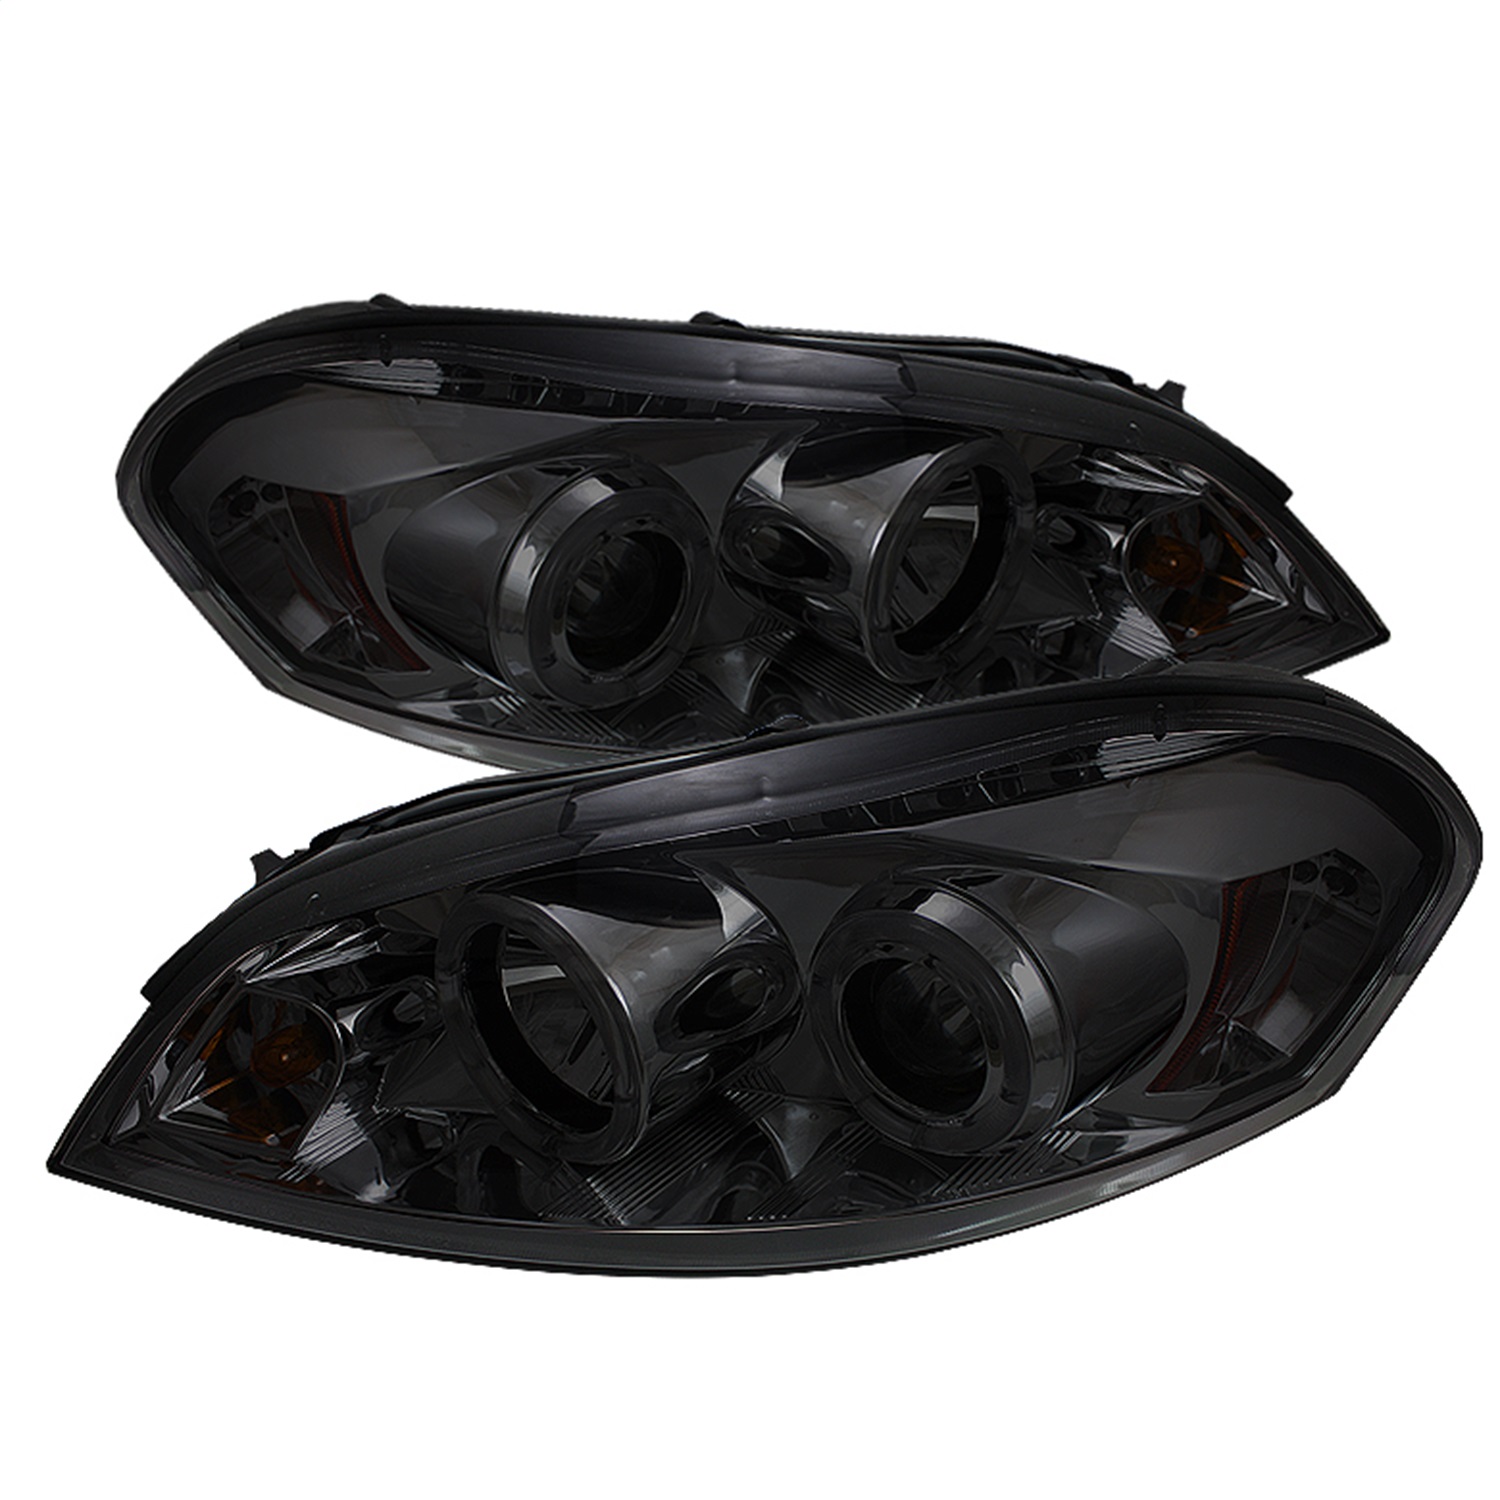 Spyder Auto 5031723 Halo LED Projector Headlights Fits 06-13 Impala Monte Carlo